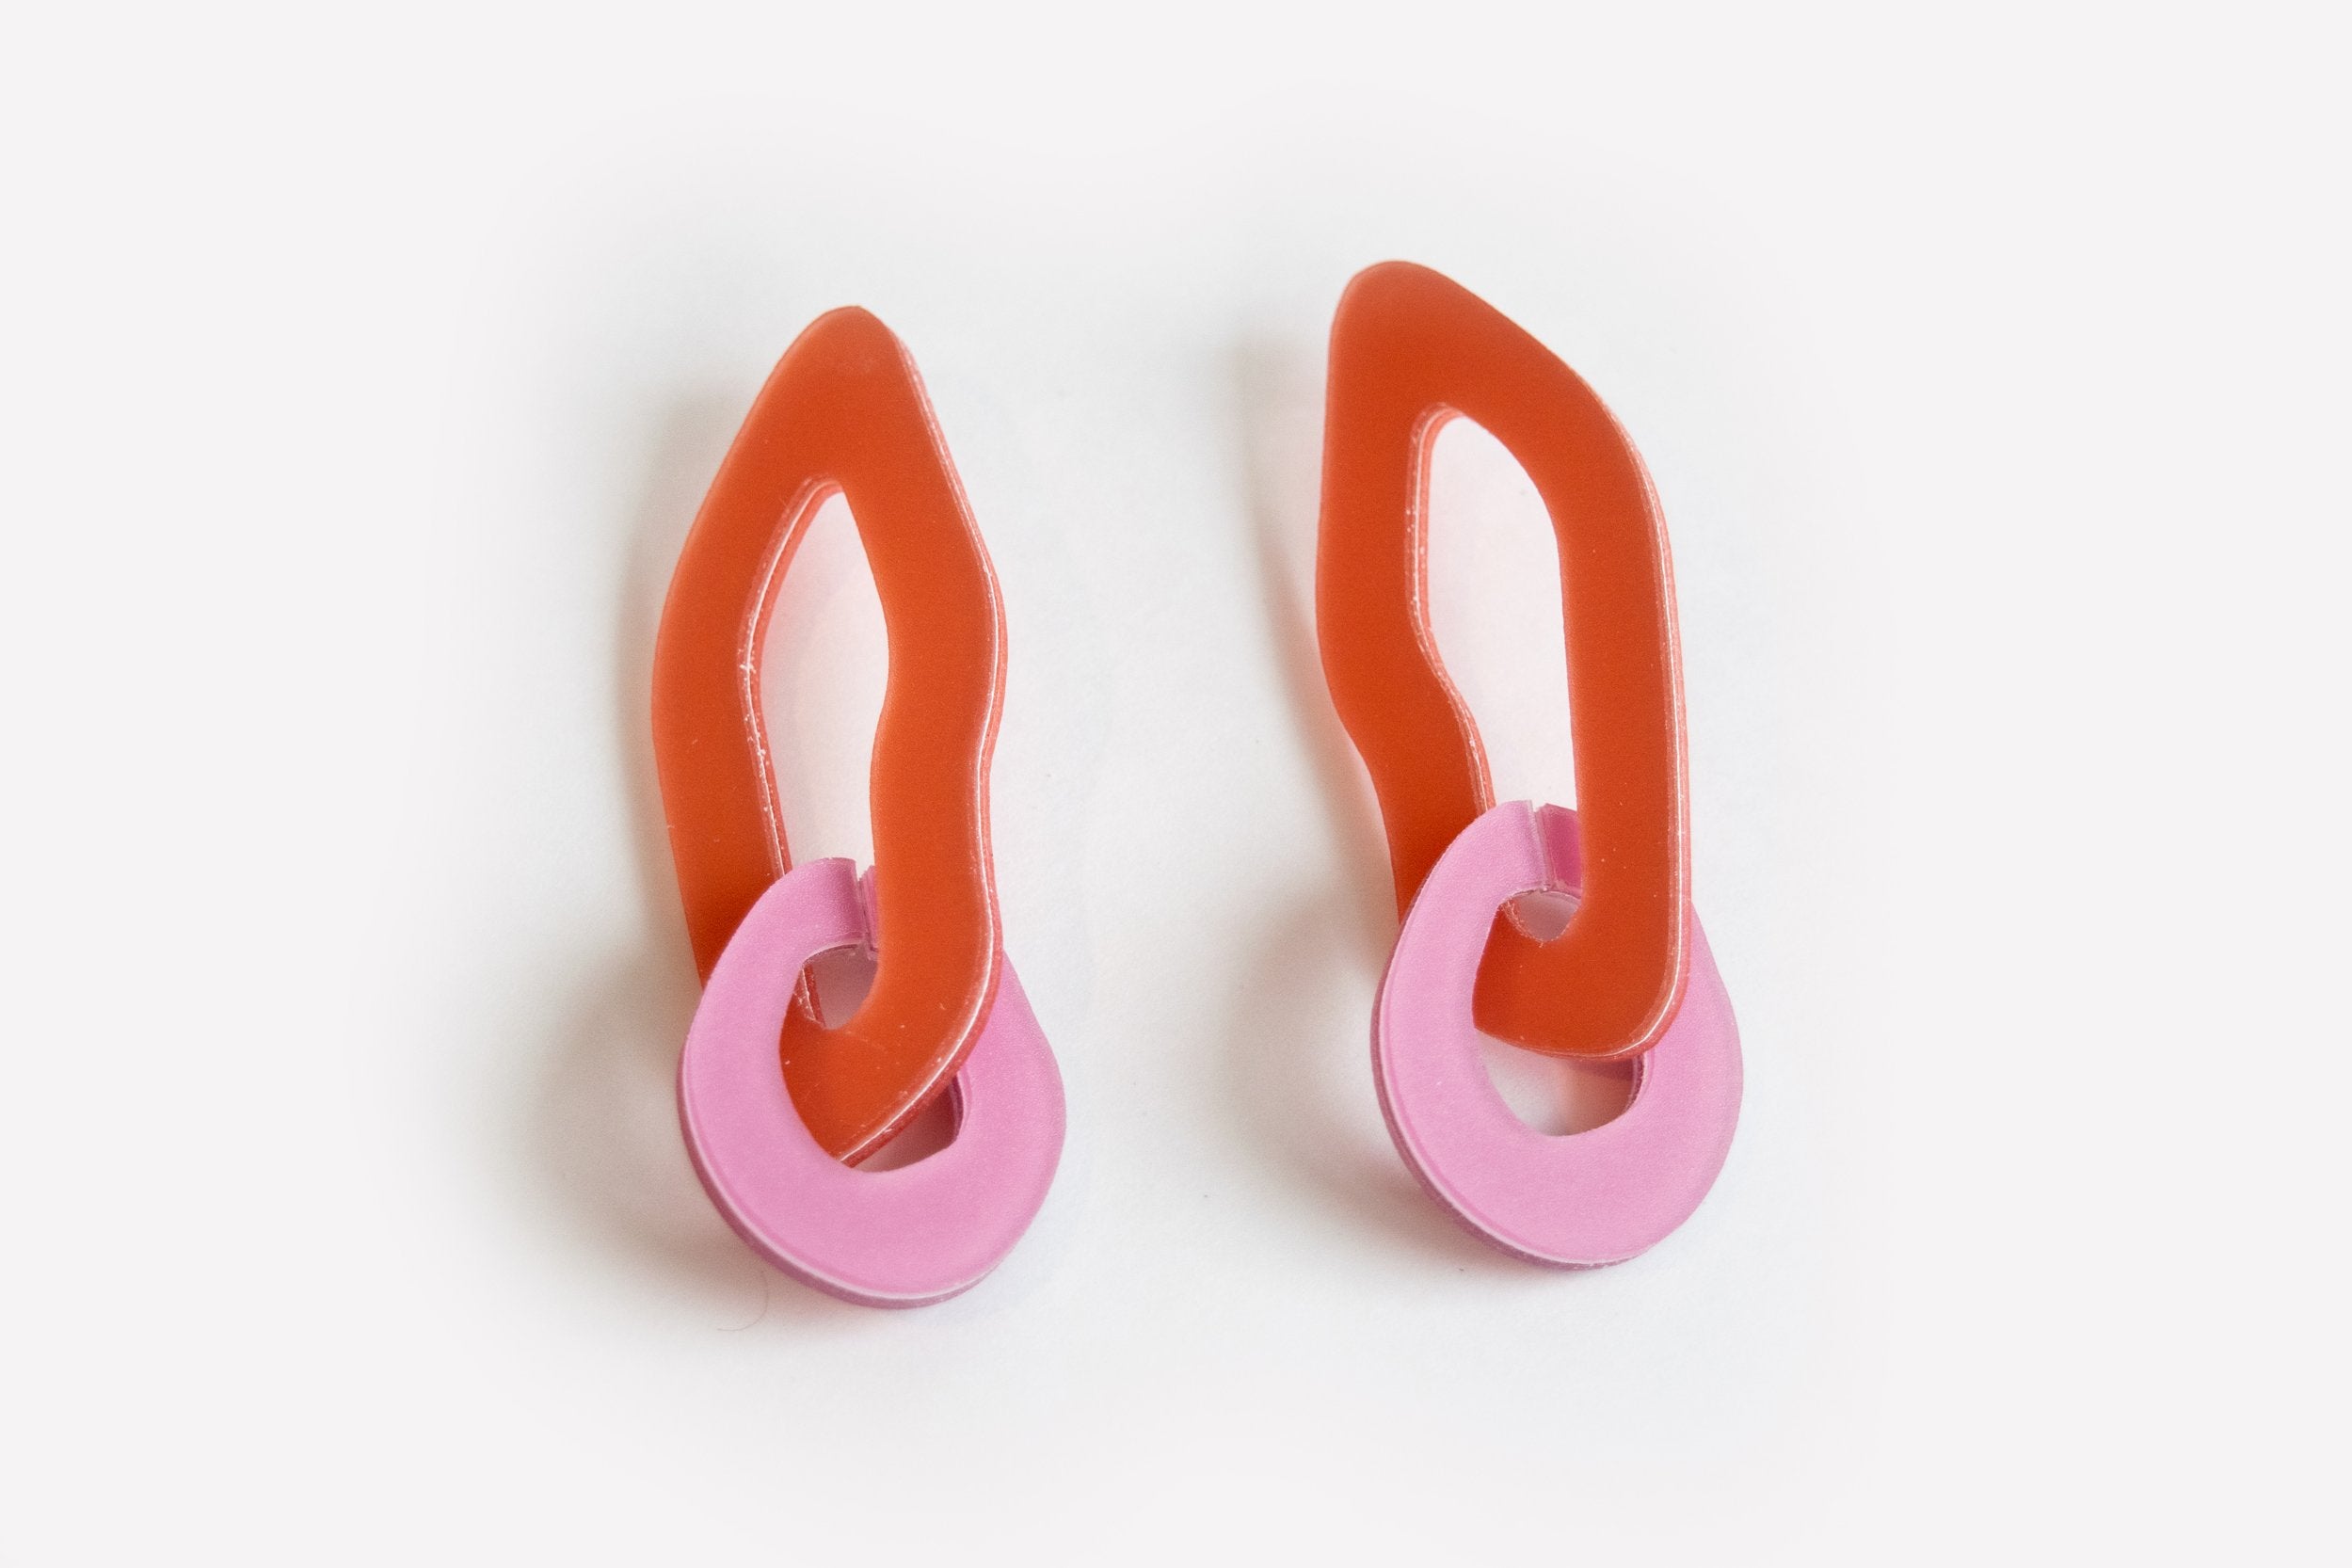 Ecoresin Earrings - Double Link